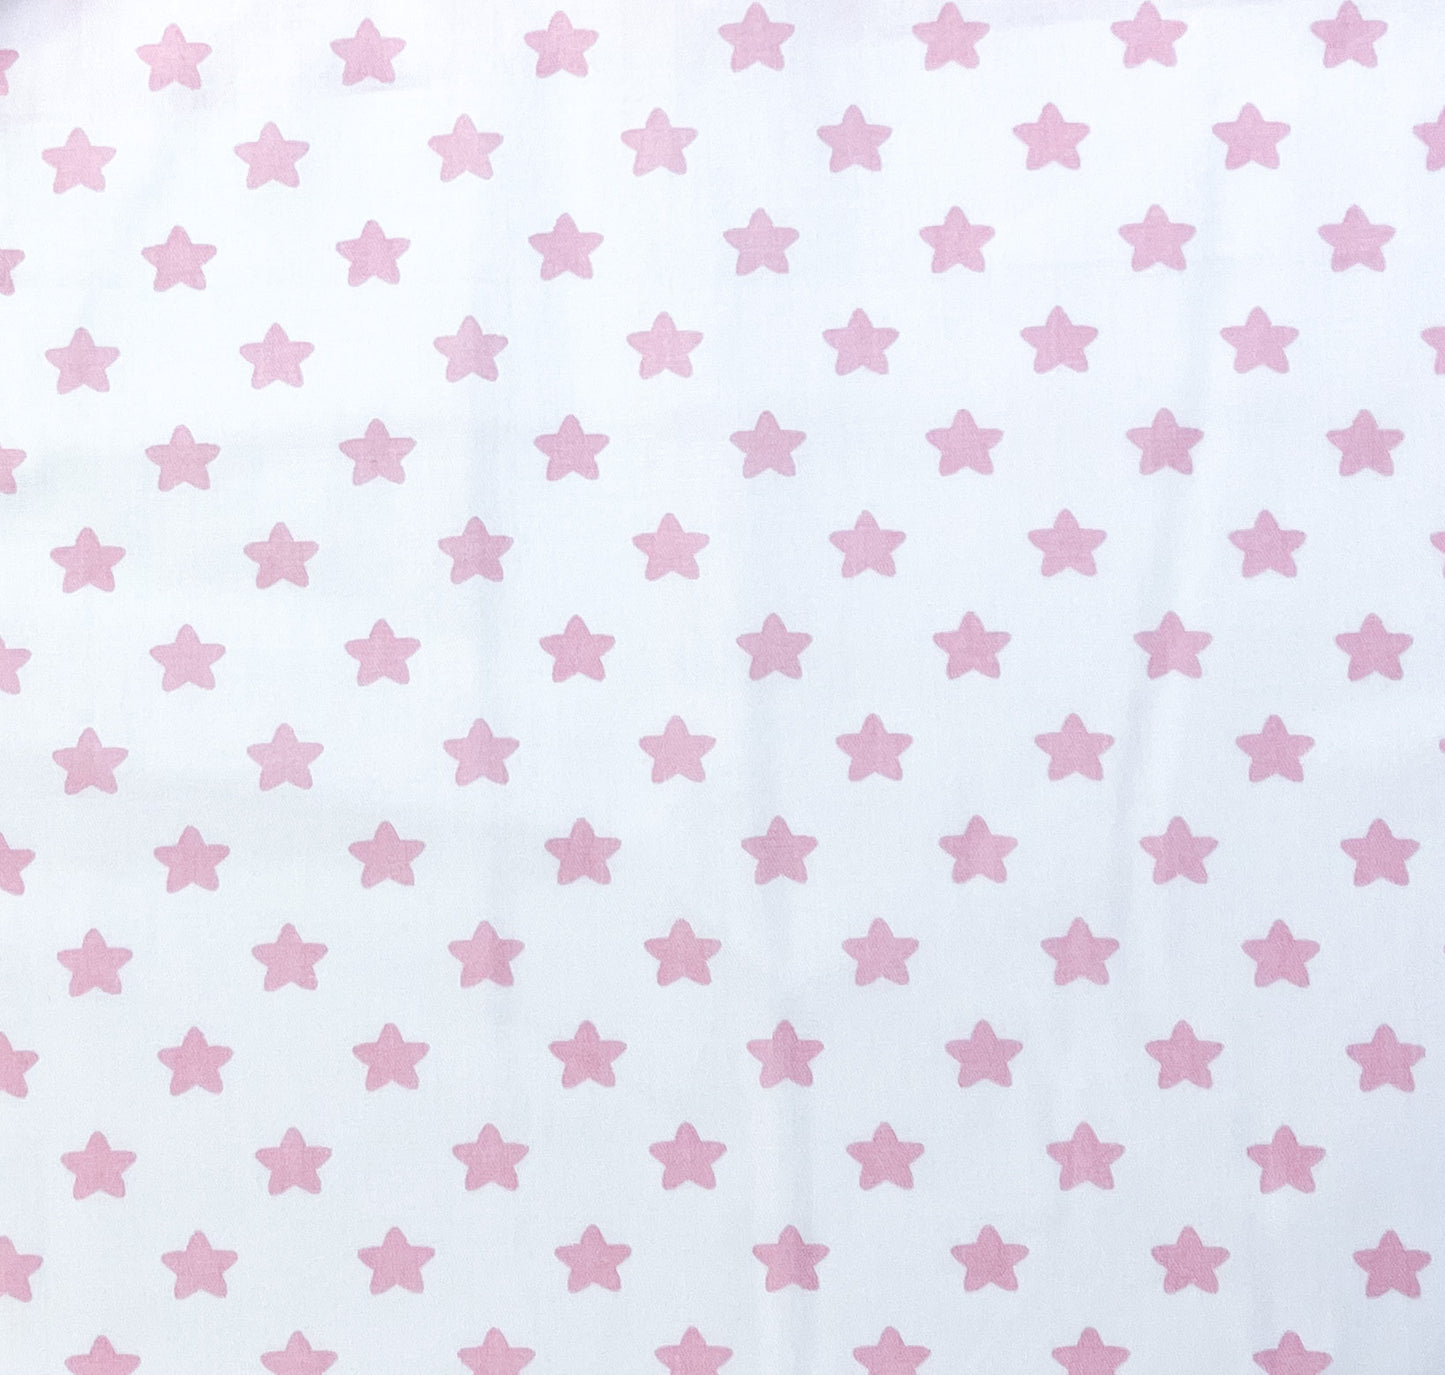 Pink stars on white